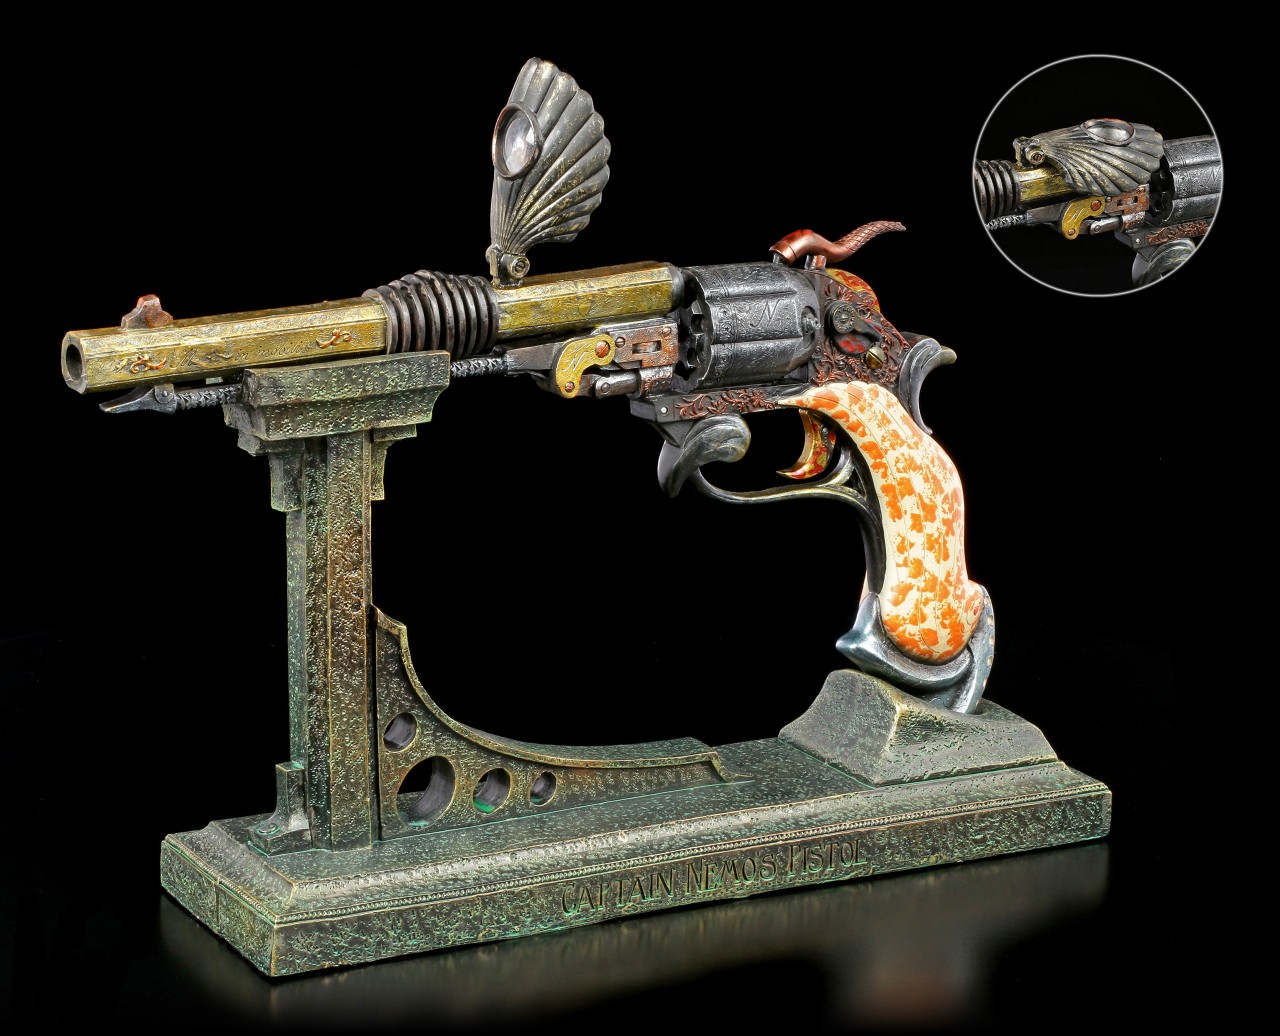 Steampunk Decoration Gun - Captain Nemo's Pistol